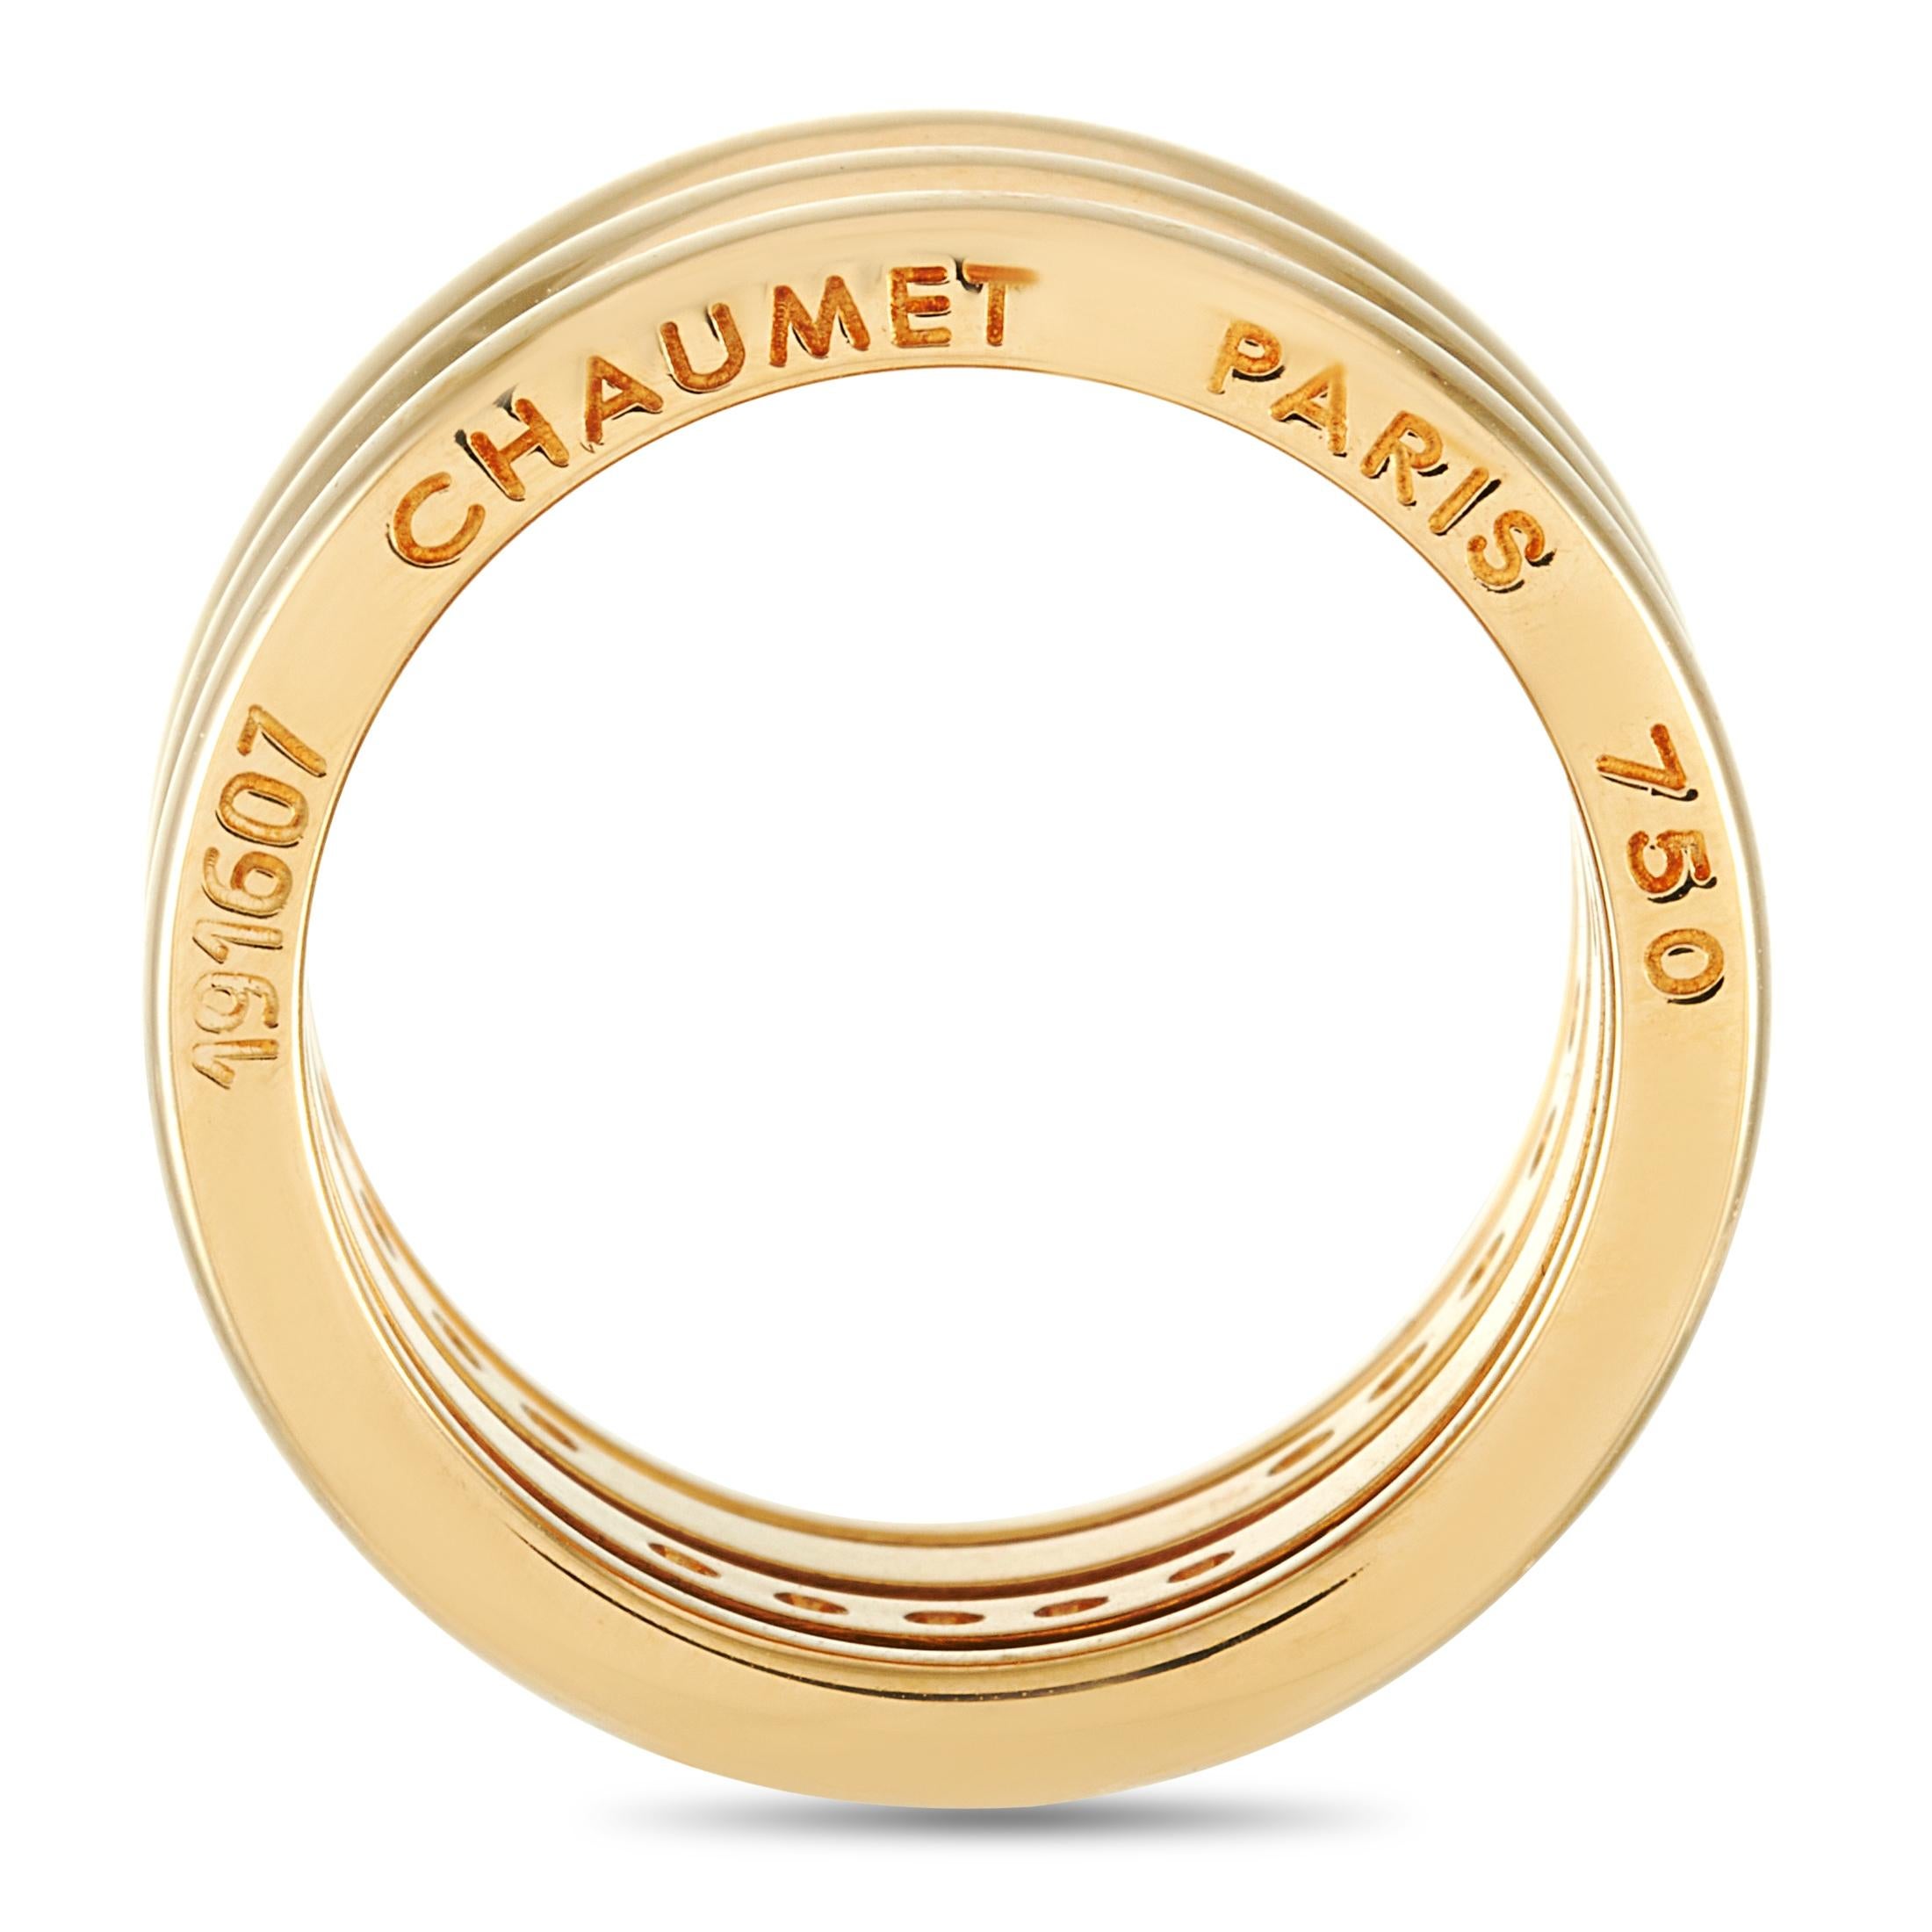 Round Cut Chaumet 18 Karat Yellow Gold Diamond Ring